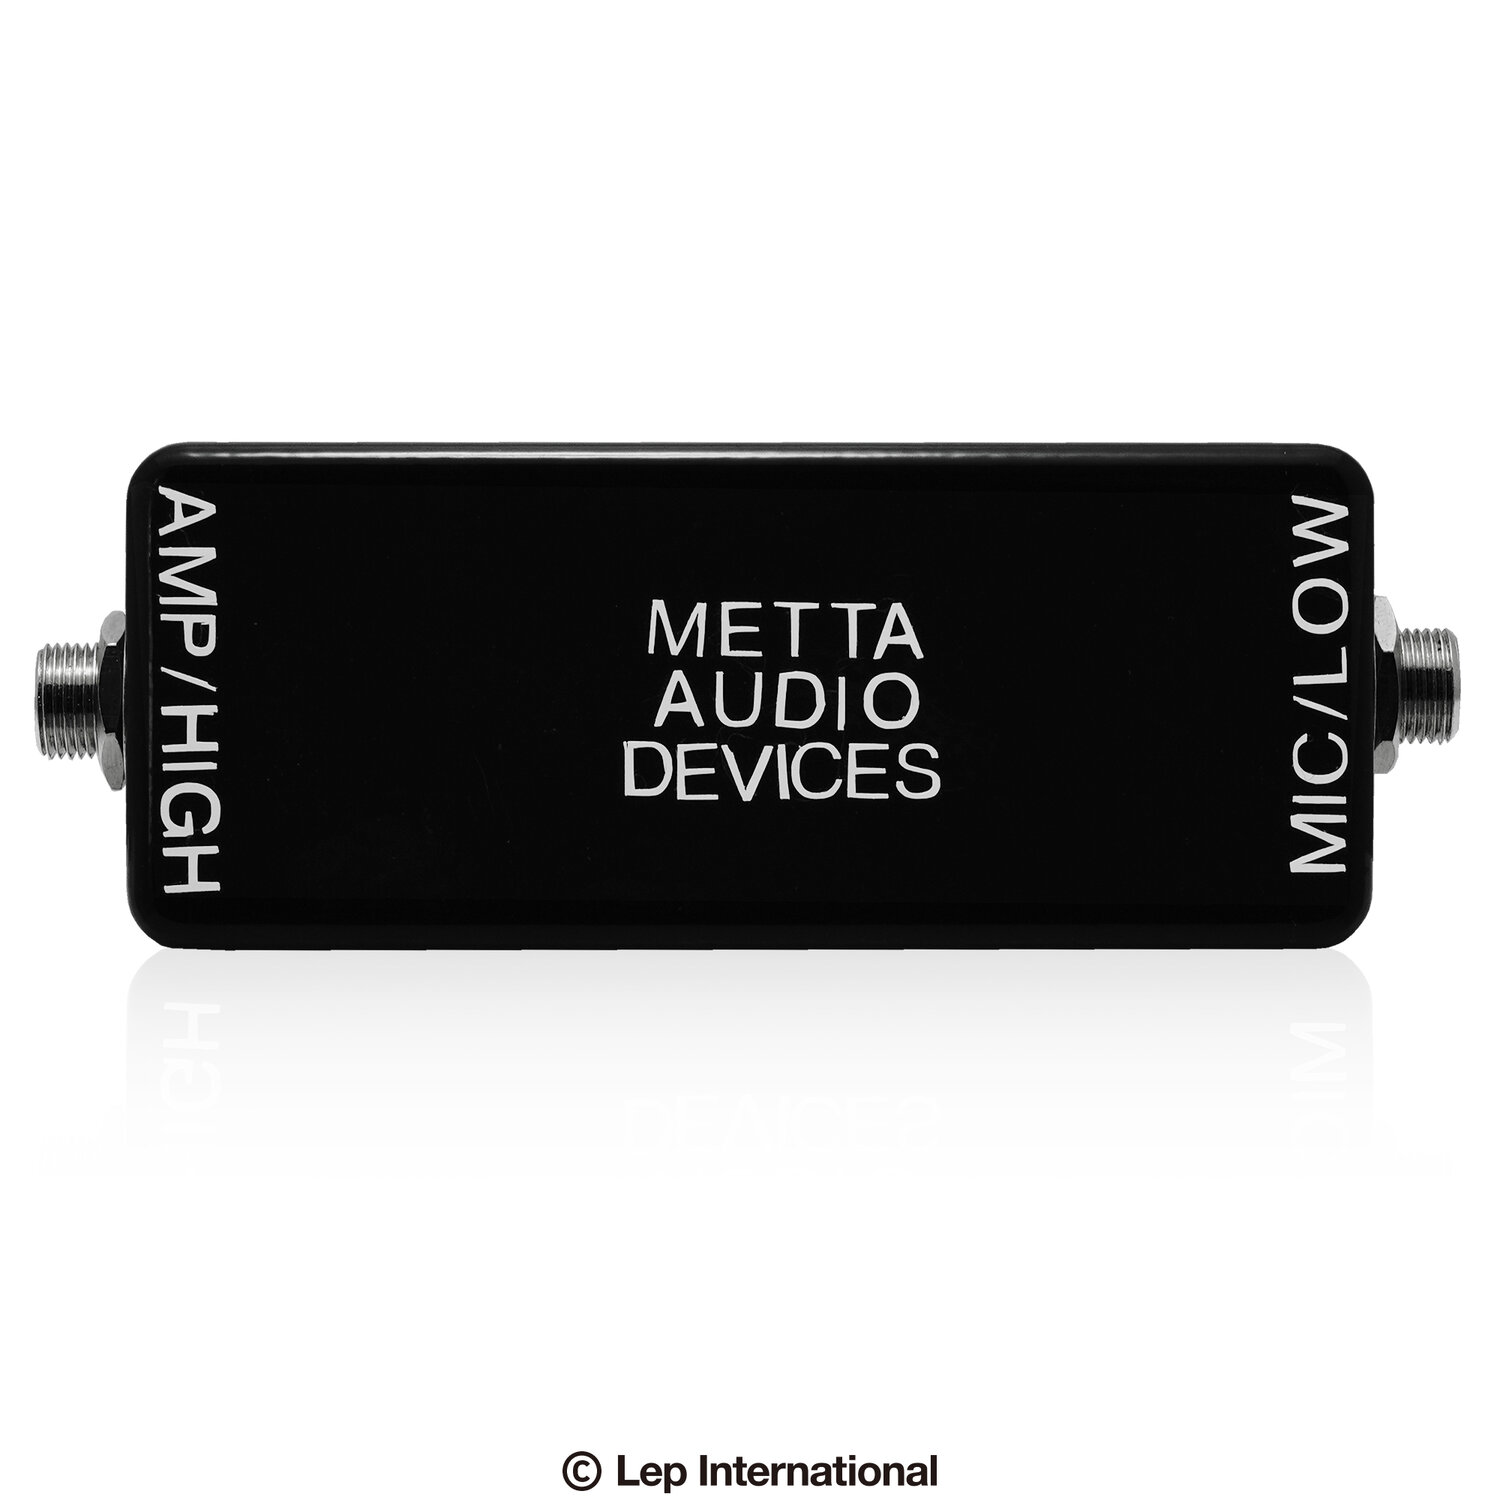 2021/4/7 METTA AUDIO DEVICES各種入荷しました — LEP INTERNATIONAL